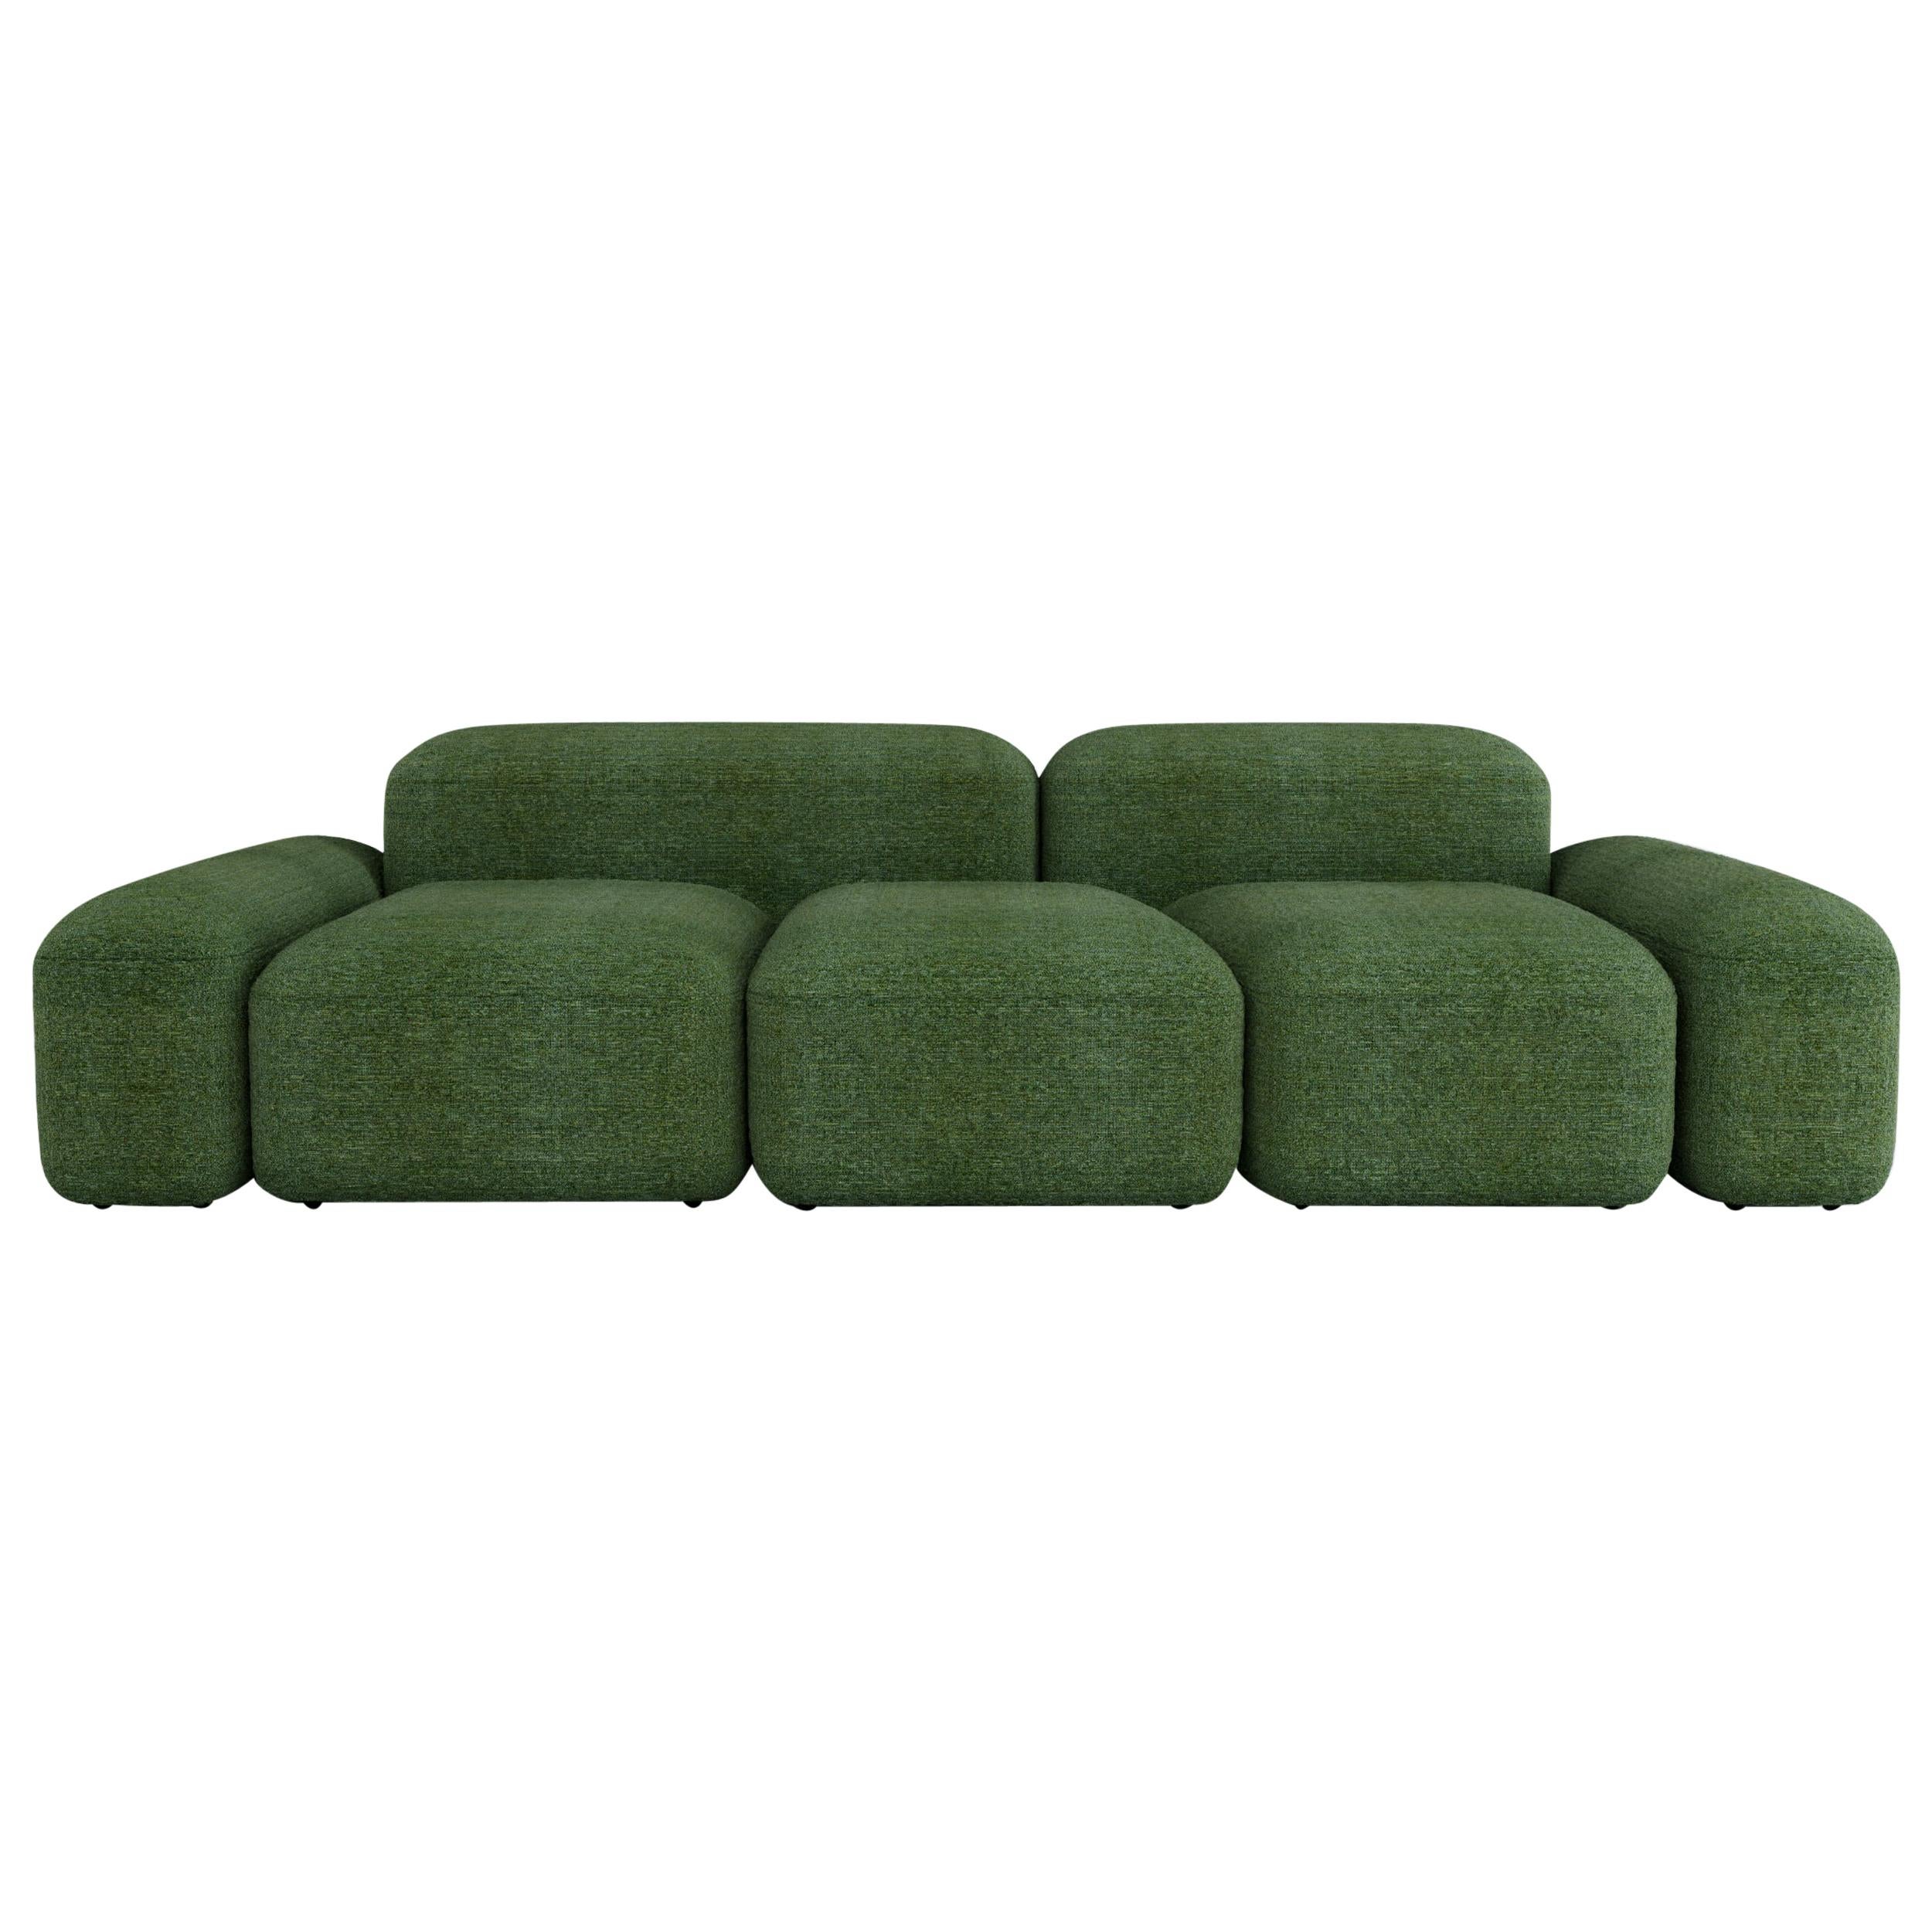 Modular and Customizable Sofa 'Lapis' 060 'Many Layouts and Fabrics Available'